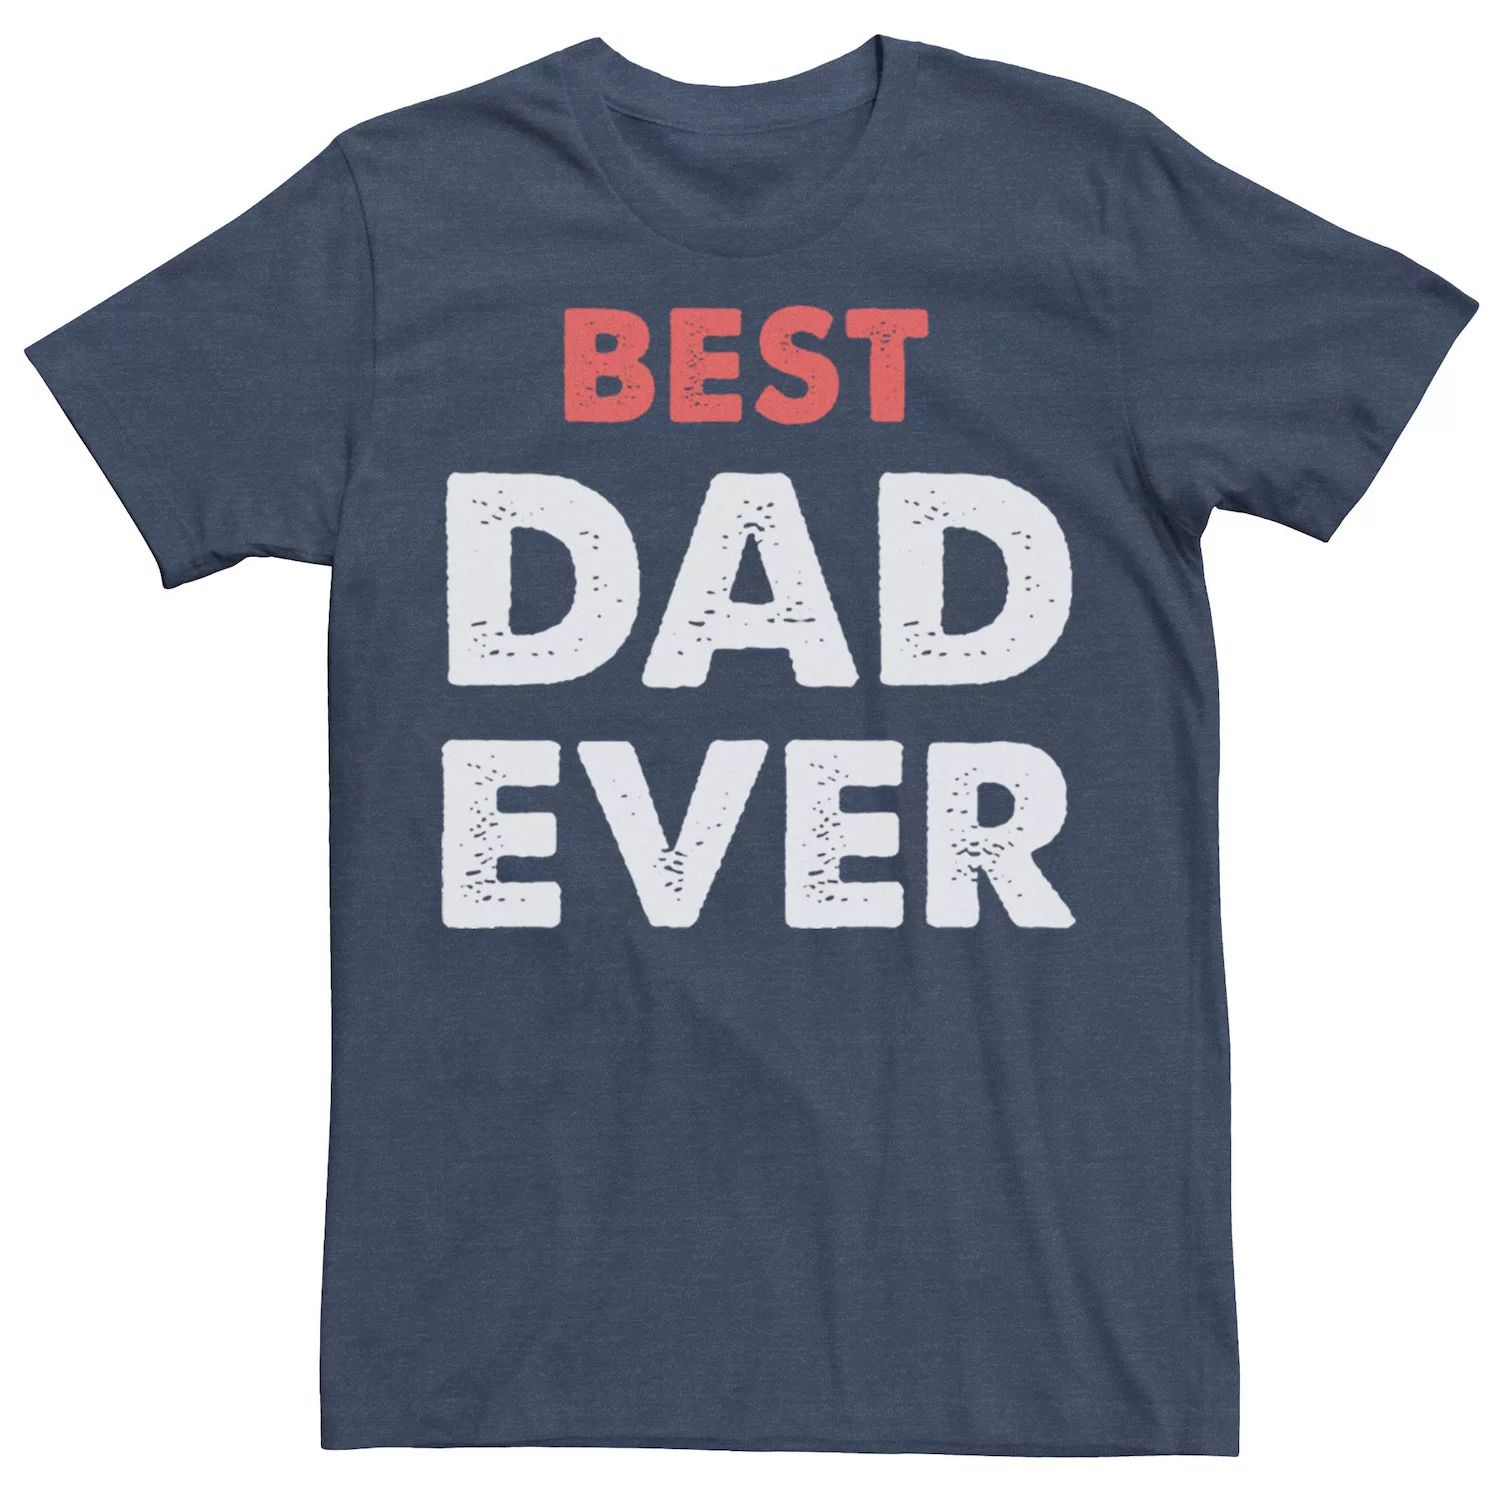 Мужская футболка Fifth Sun Best Dad Ever с жирной надписью Licensed Character